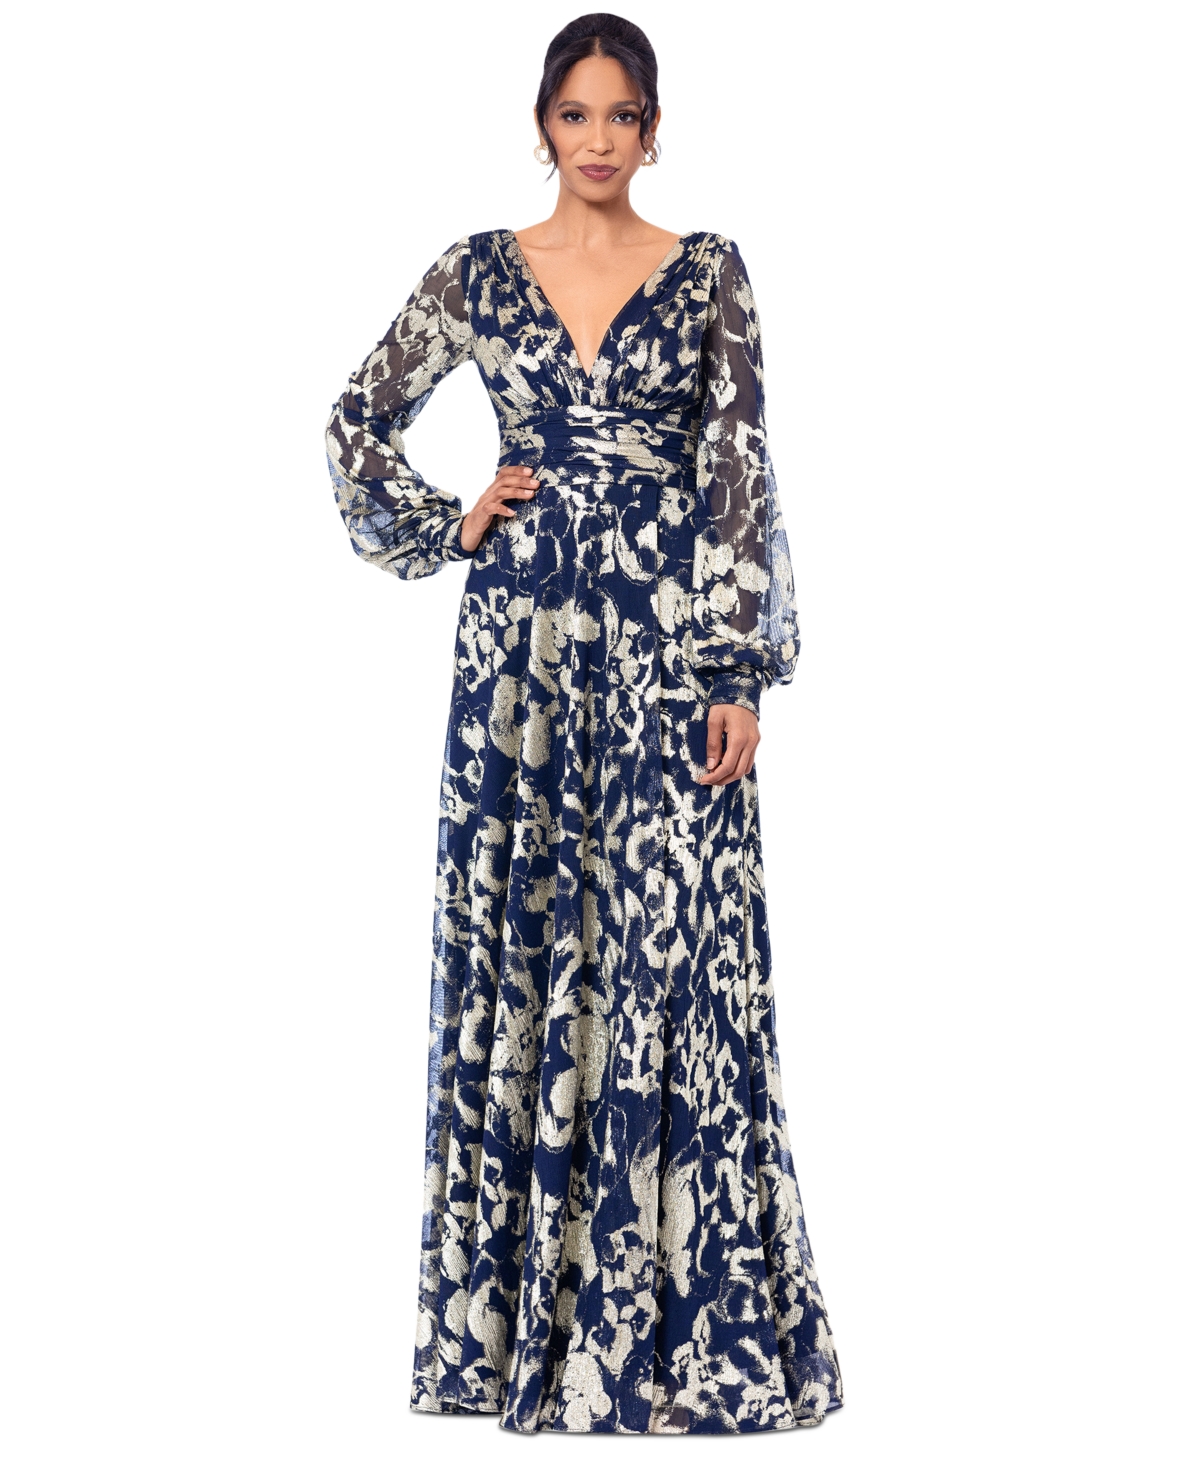 Women's Printed Blouson-Sleeve Maxi Dress - Navy/Gold